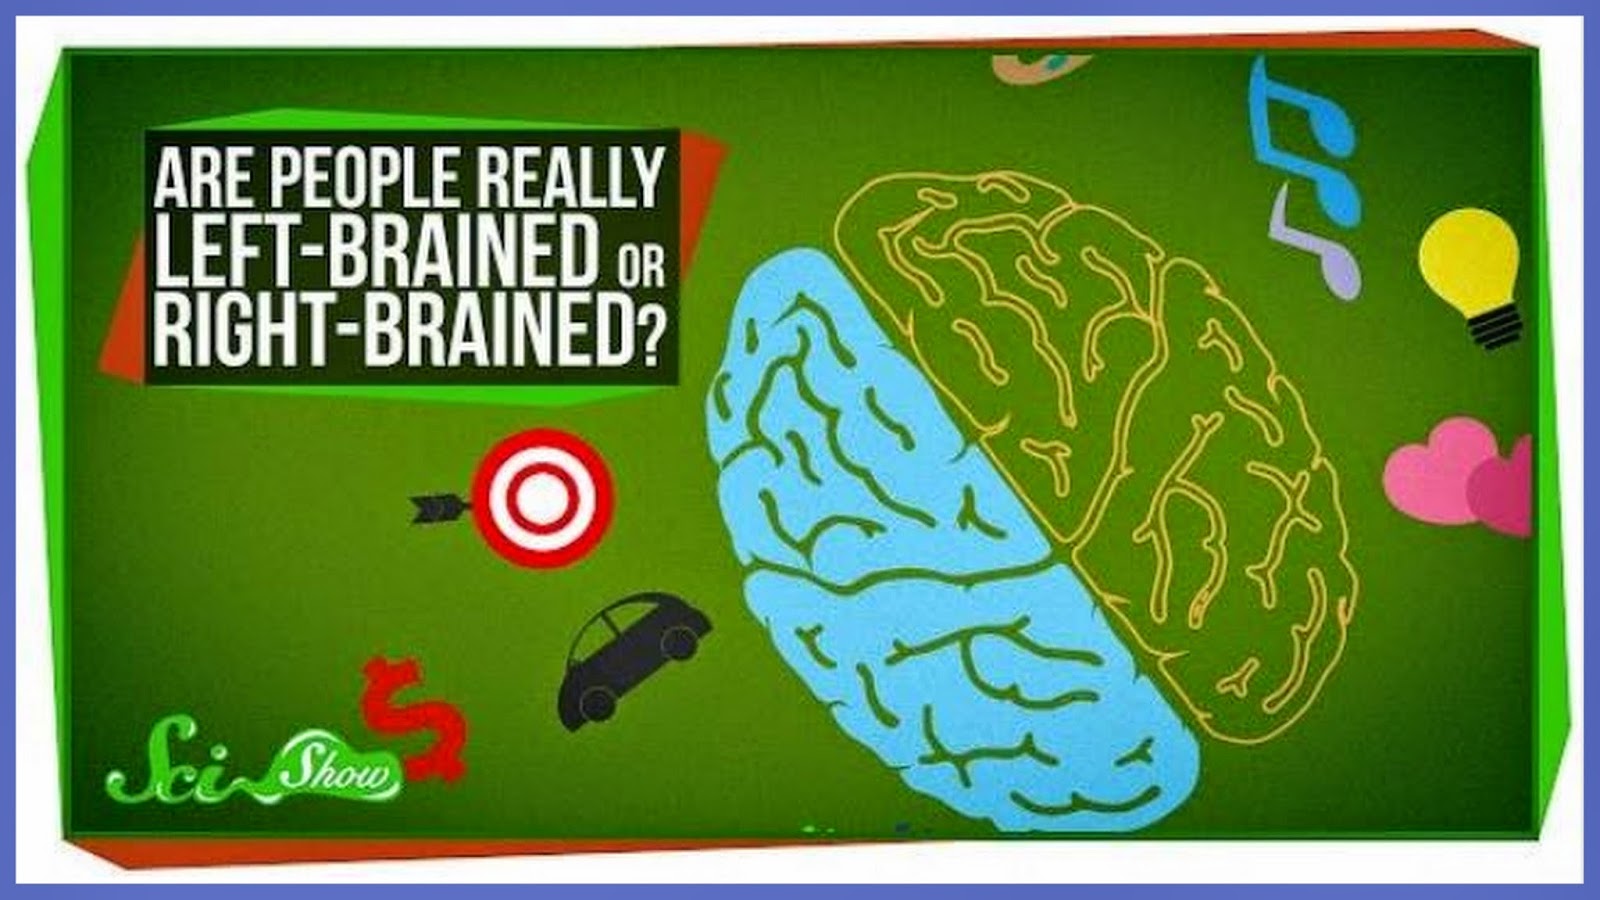 Left Brained people. Second Brain. Left Brain borders right Brain.